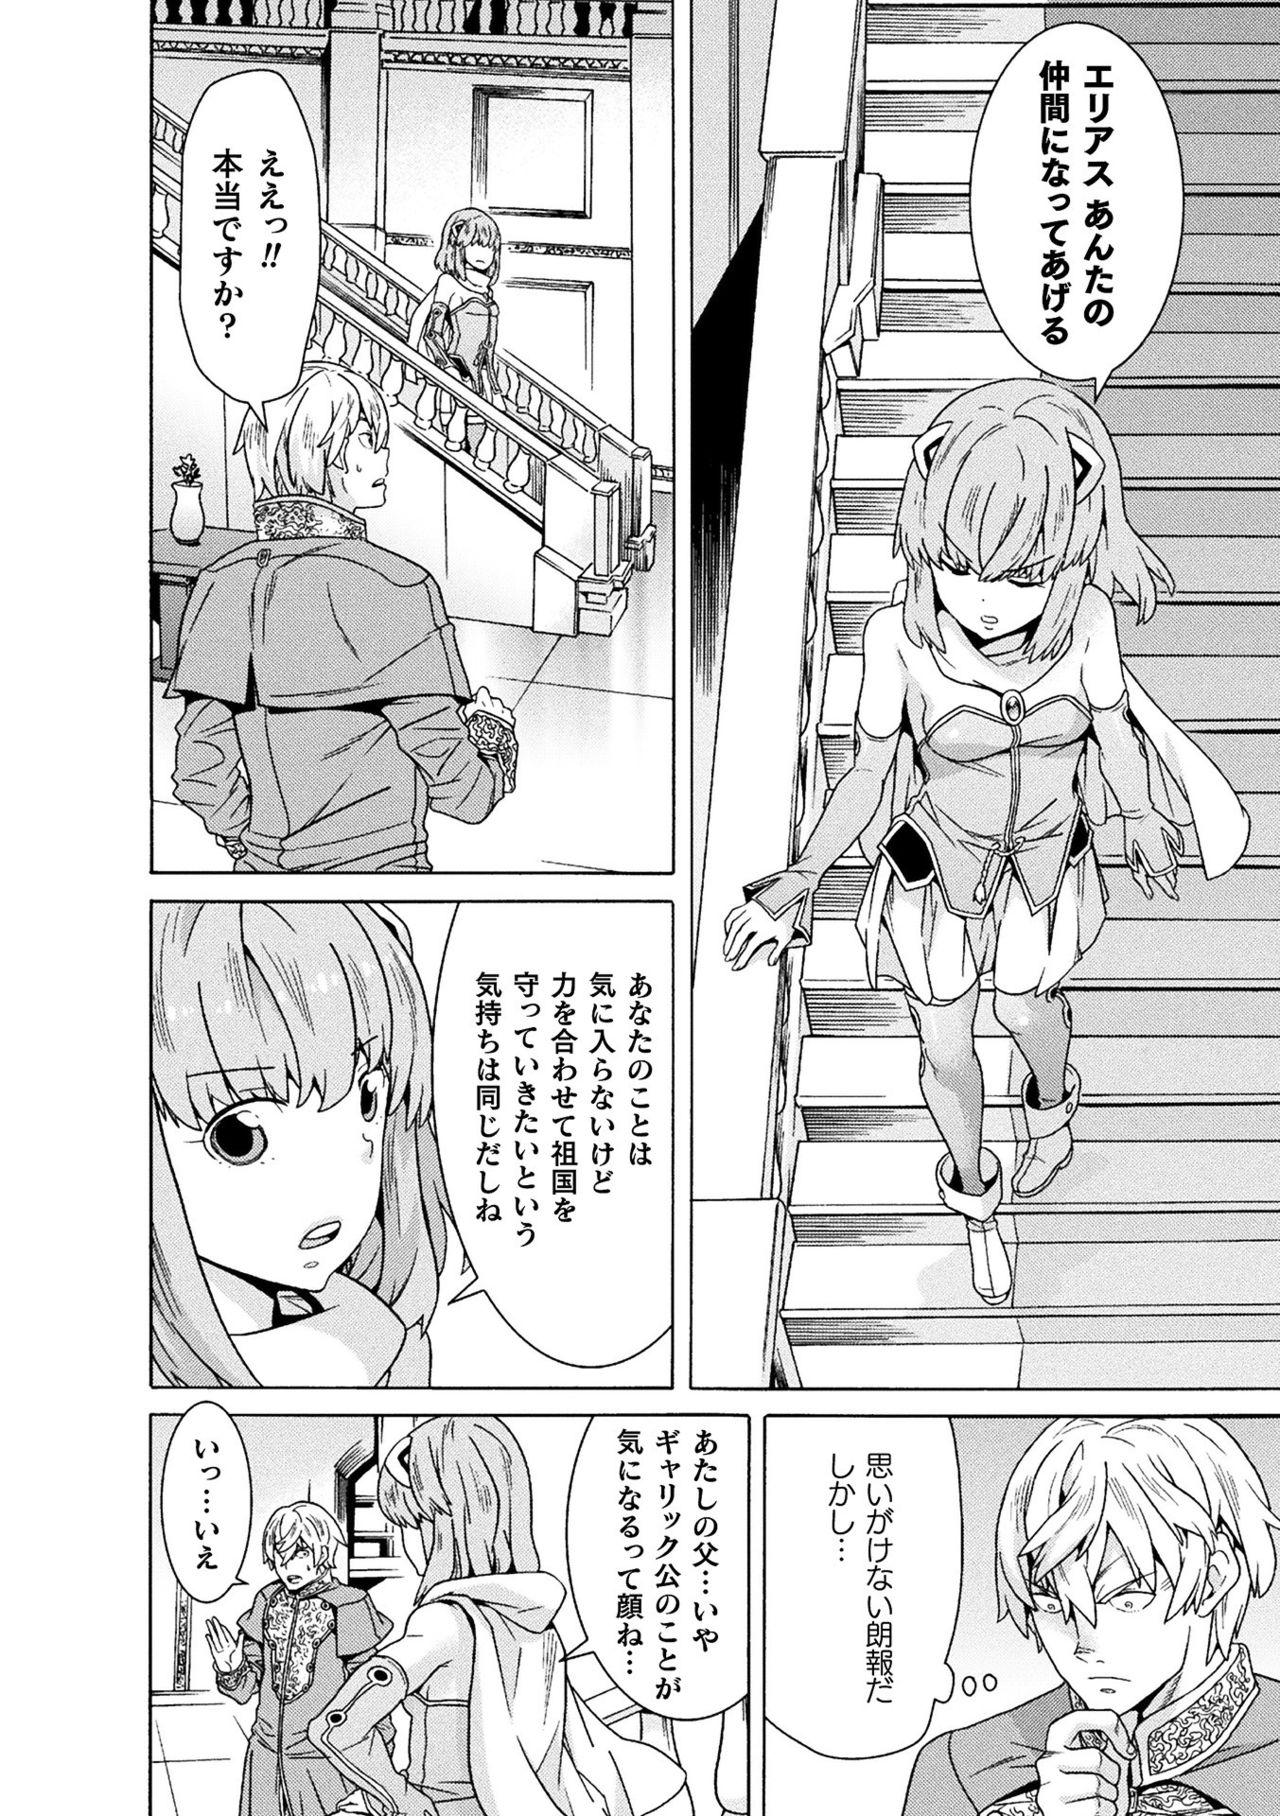 Uniform Makenshi Leane the COMIC Episode 4 Puto - Page 6